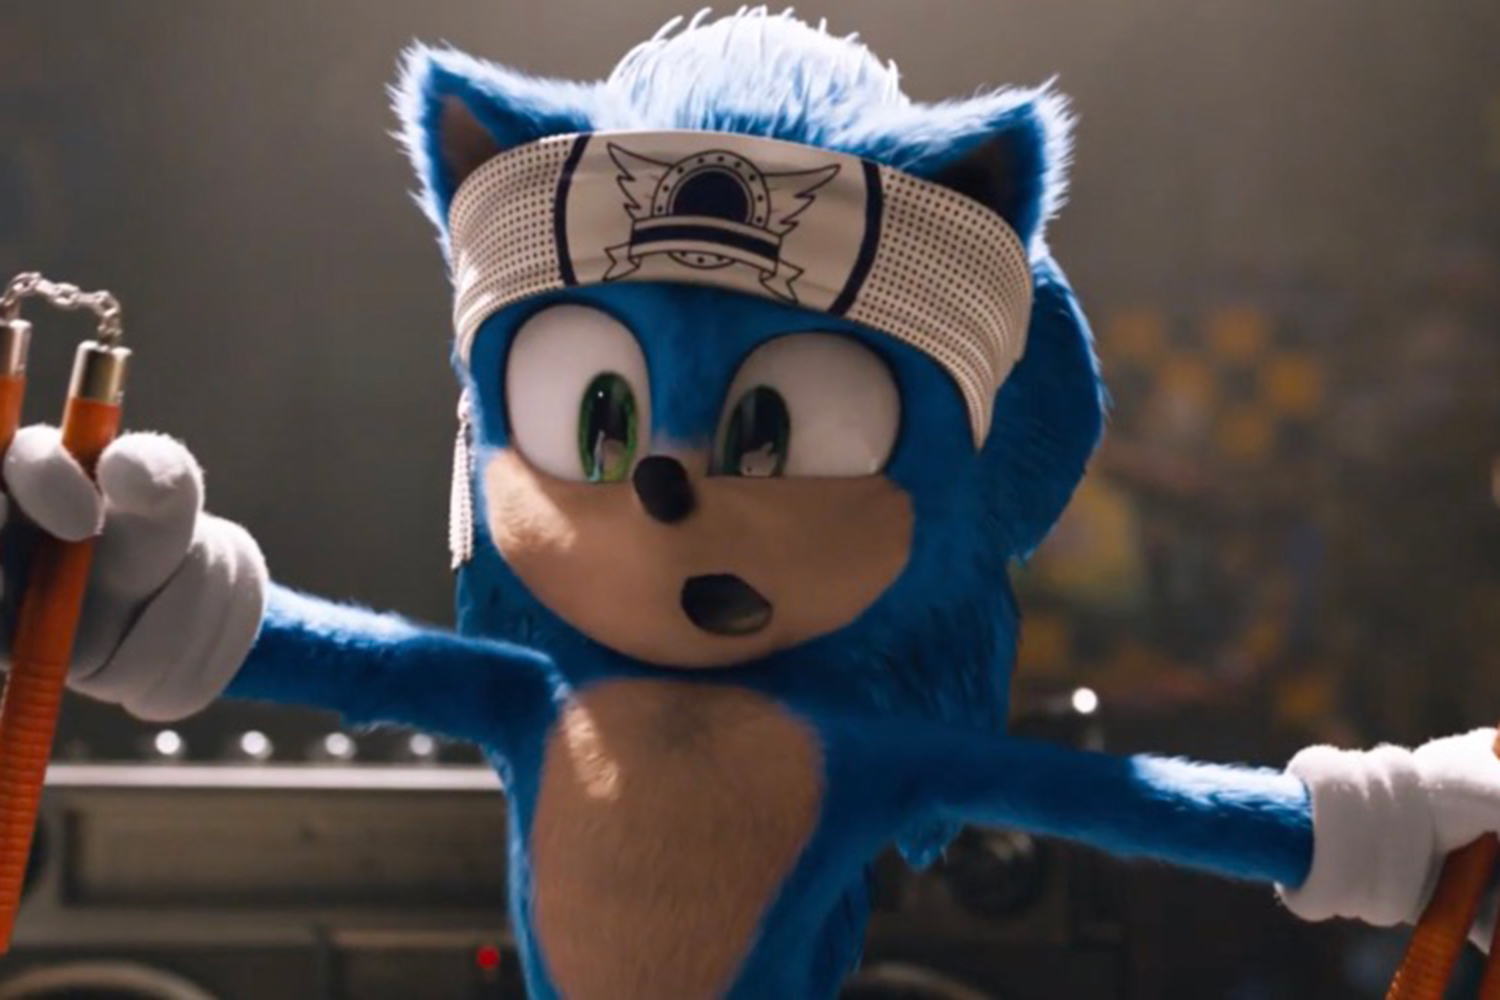 Sonic the Hedgehog is designed for fans – no wonder movie critics